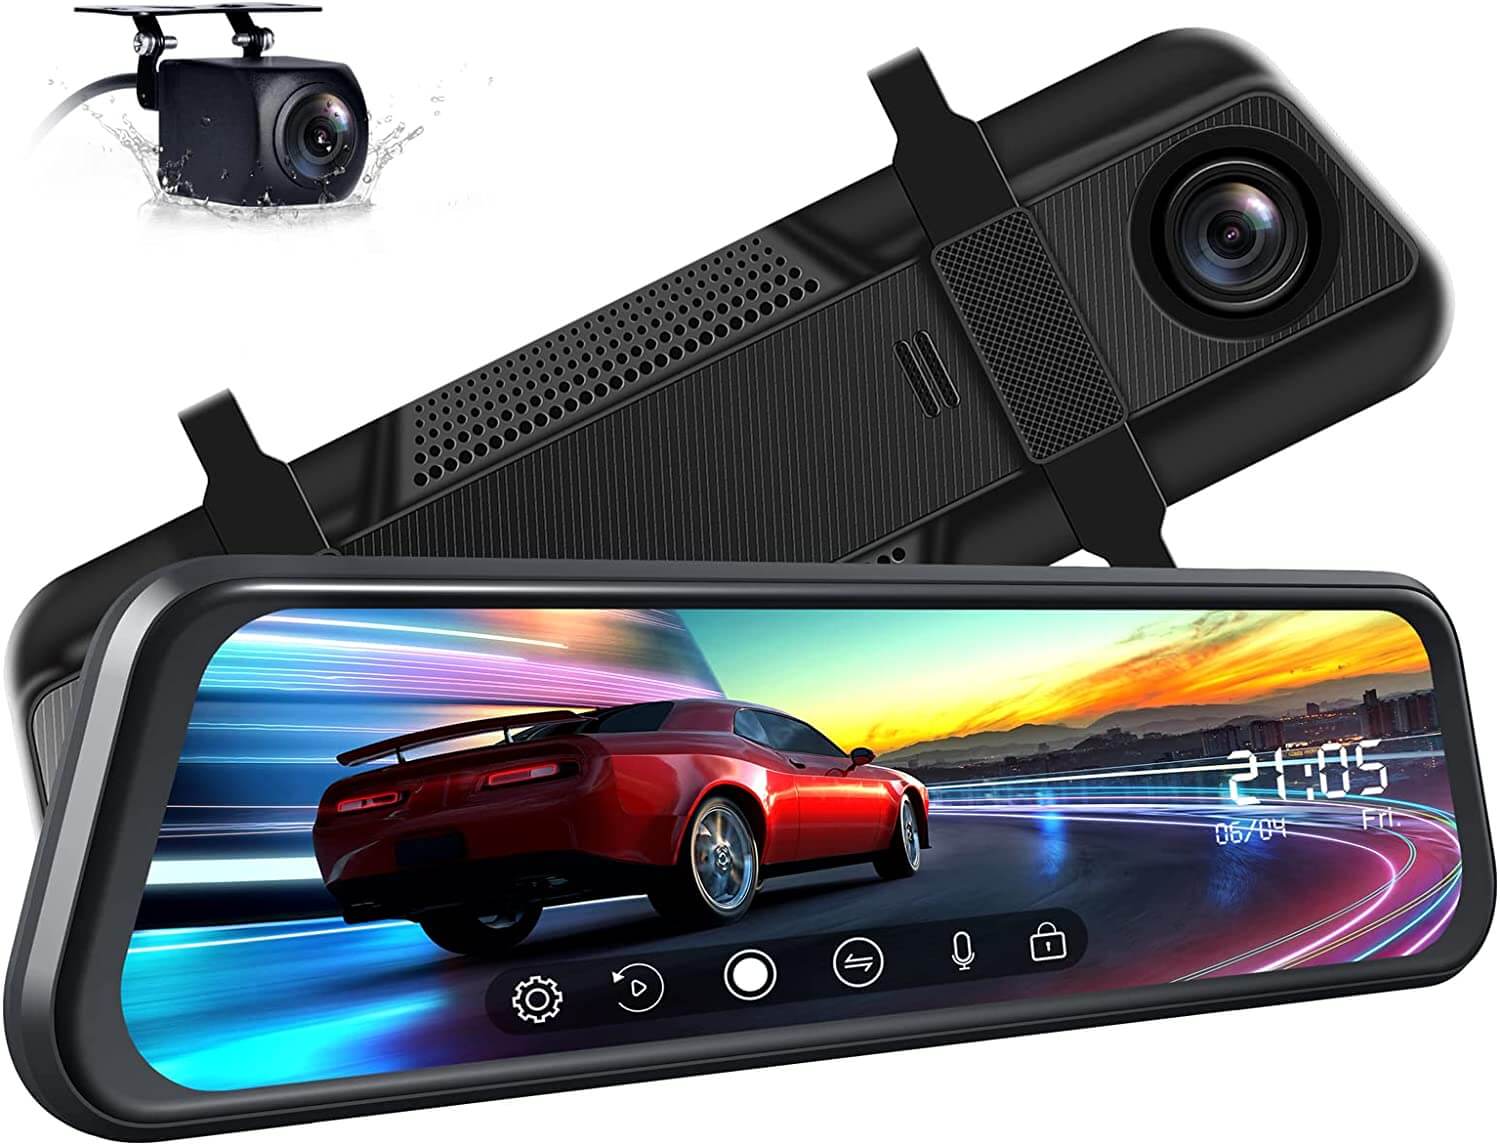 10'' Mirror best rearview mirror dash camera - Smart Tech Shopping